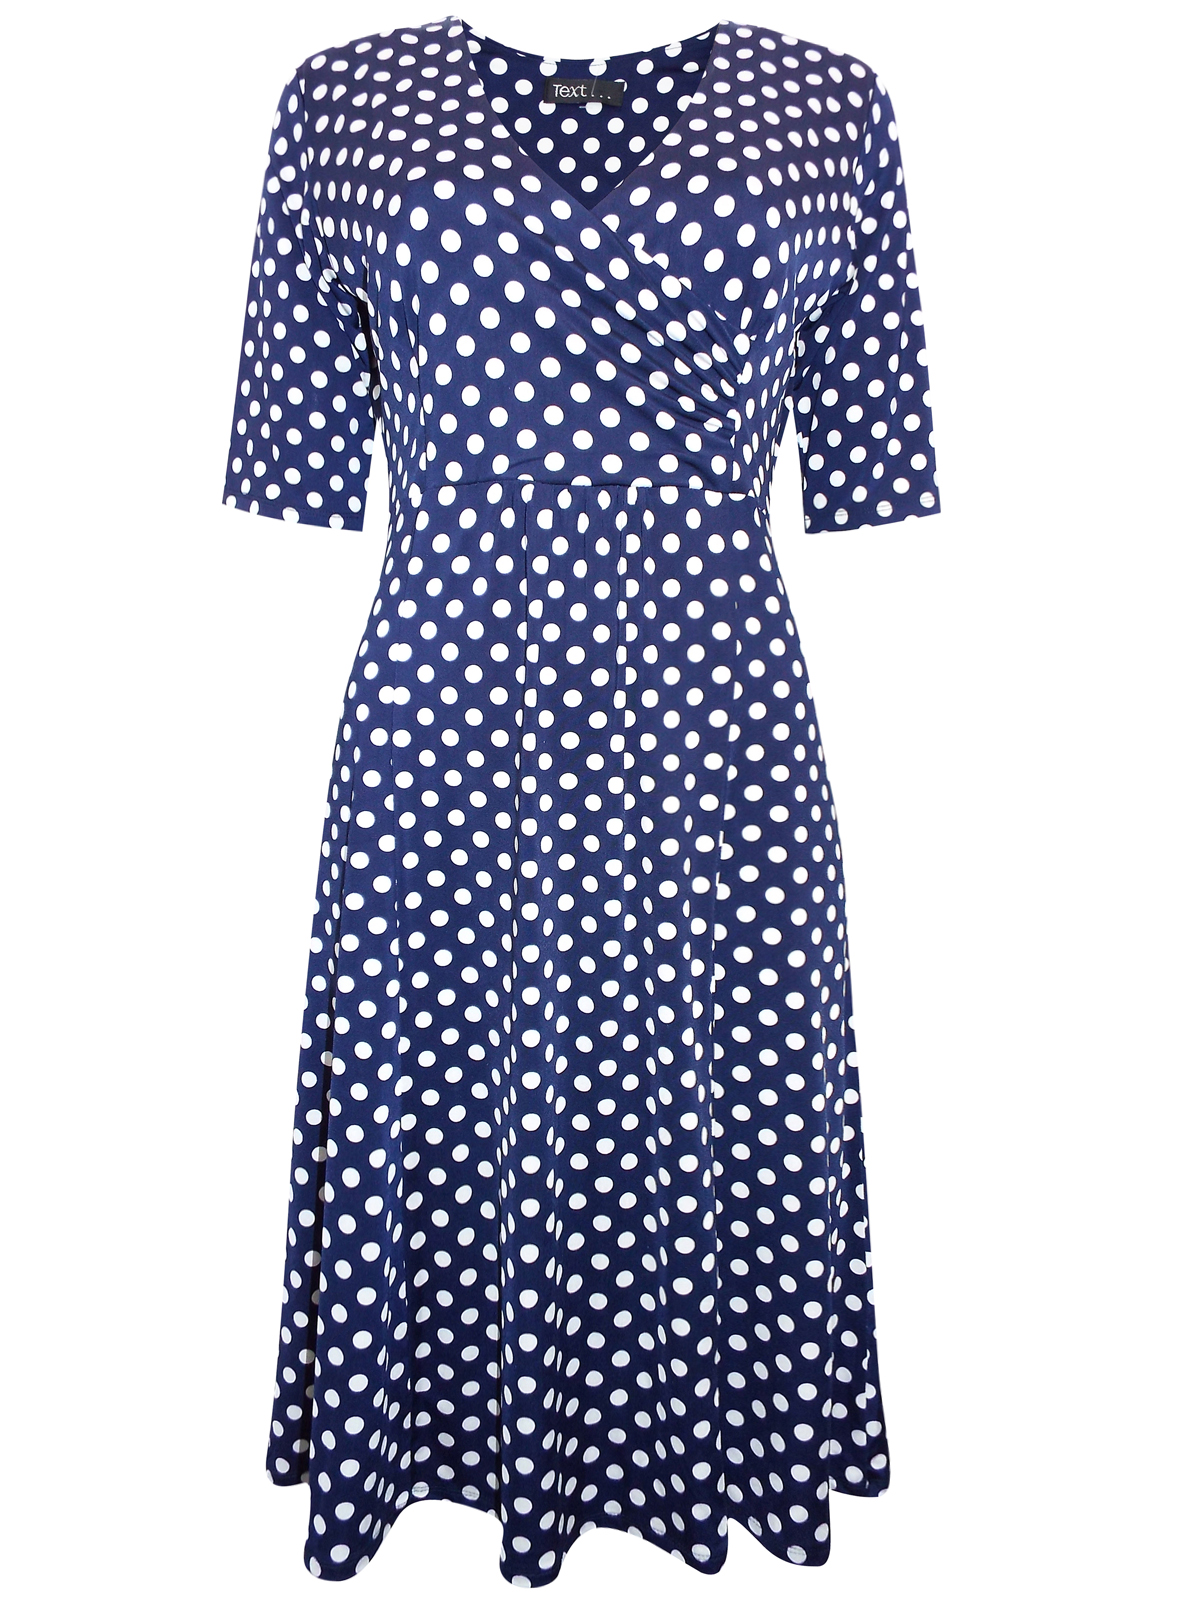 //text.. - - NAVY Polka Dot Half Sleeve Midi Dress - Size 12 to 18